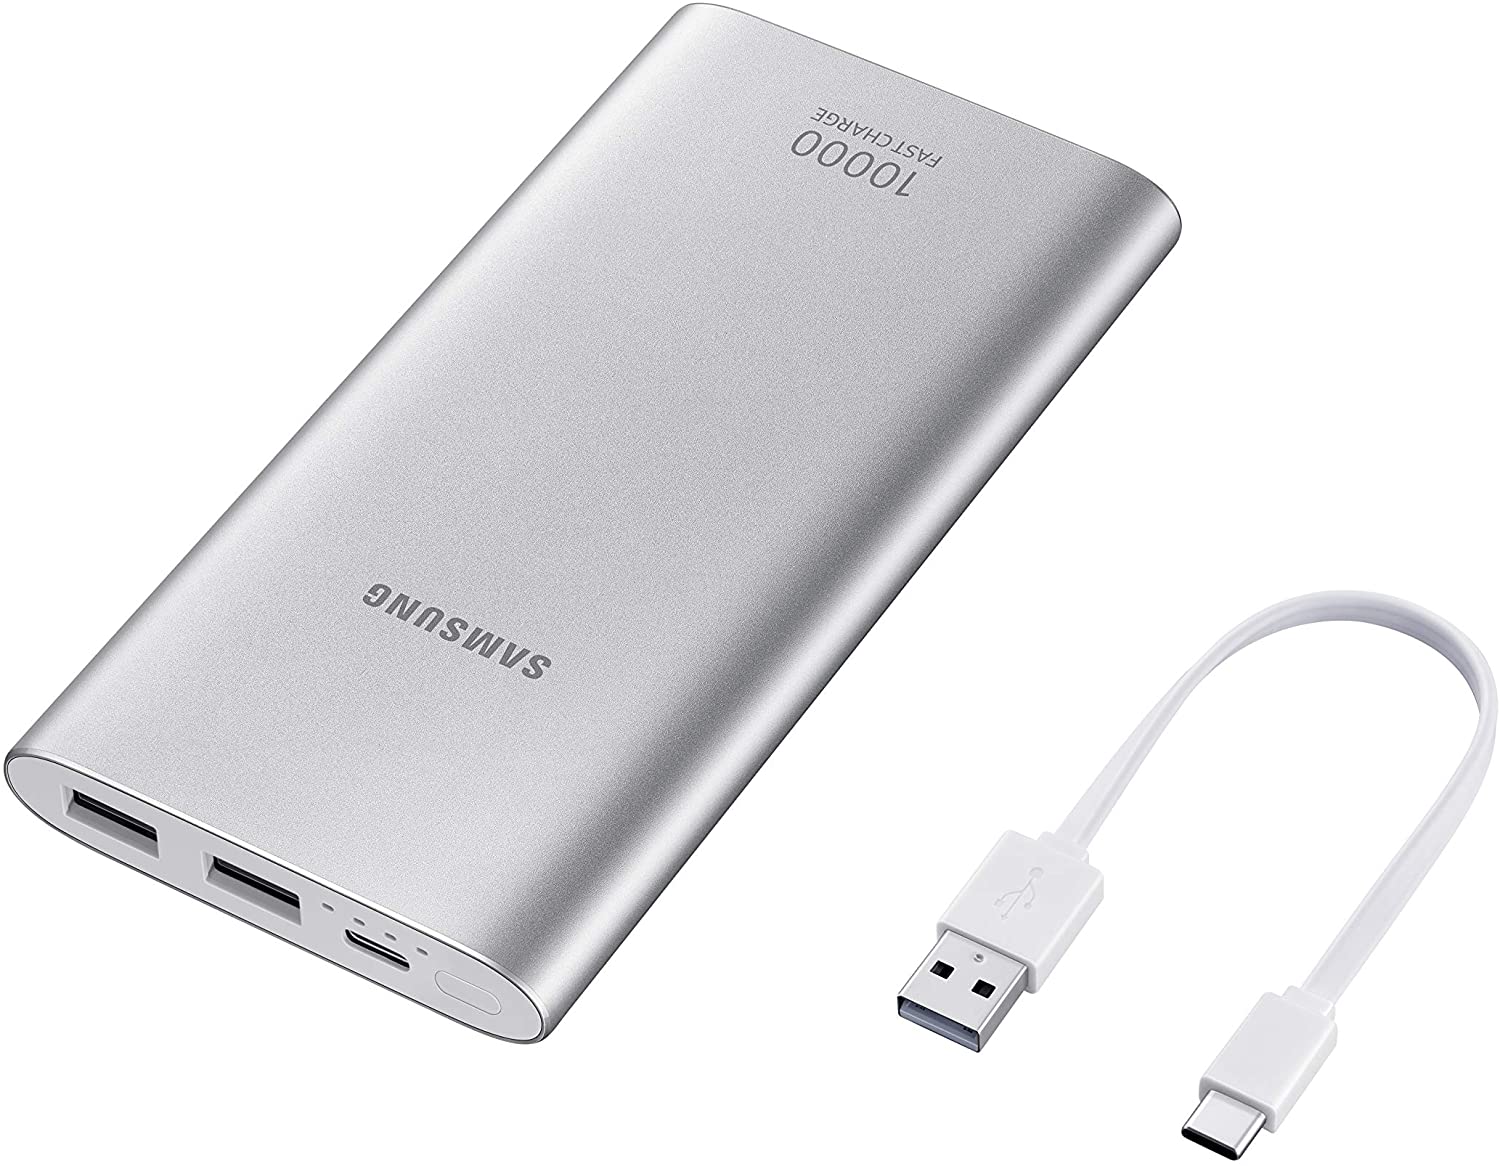 Imagem: Bateria Externa 10,000 mAh, USB Tipo C, Samsung